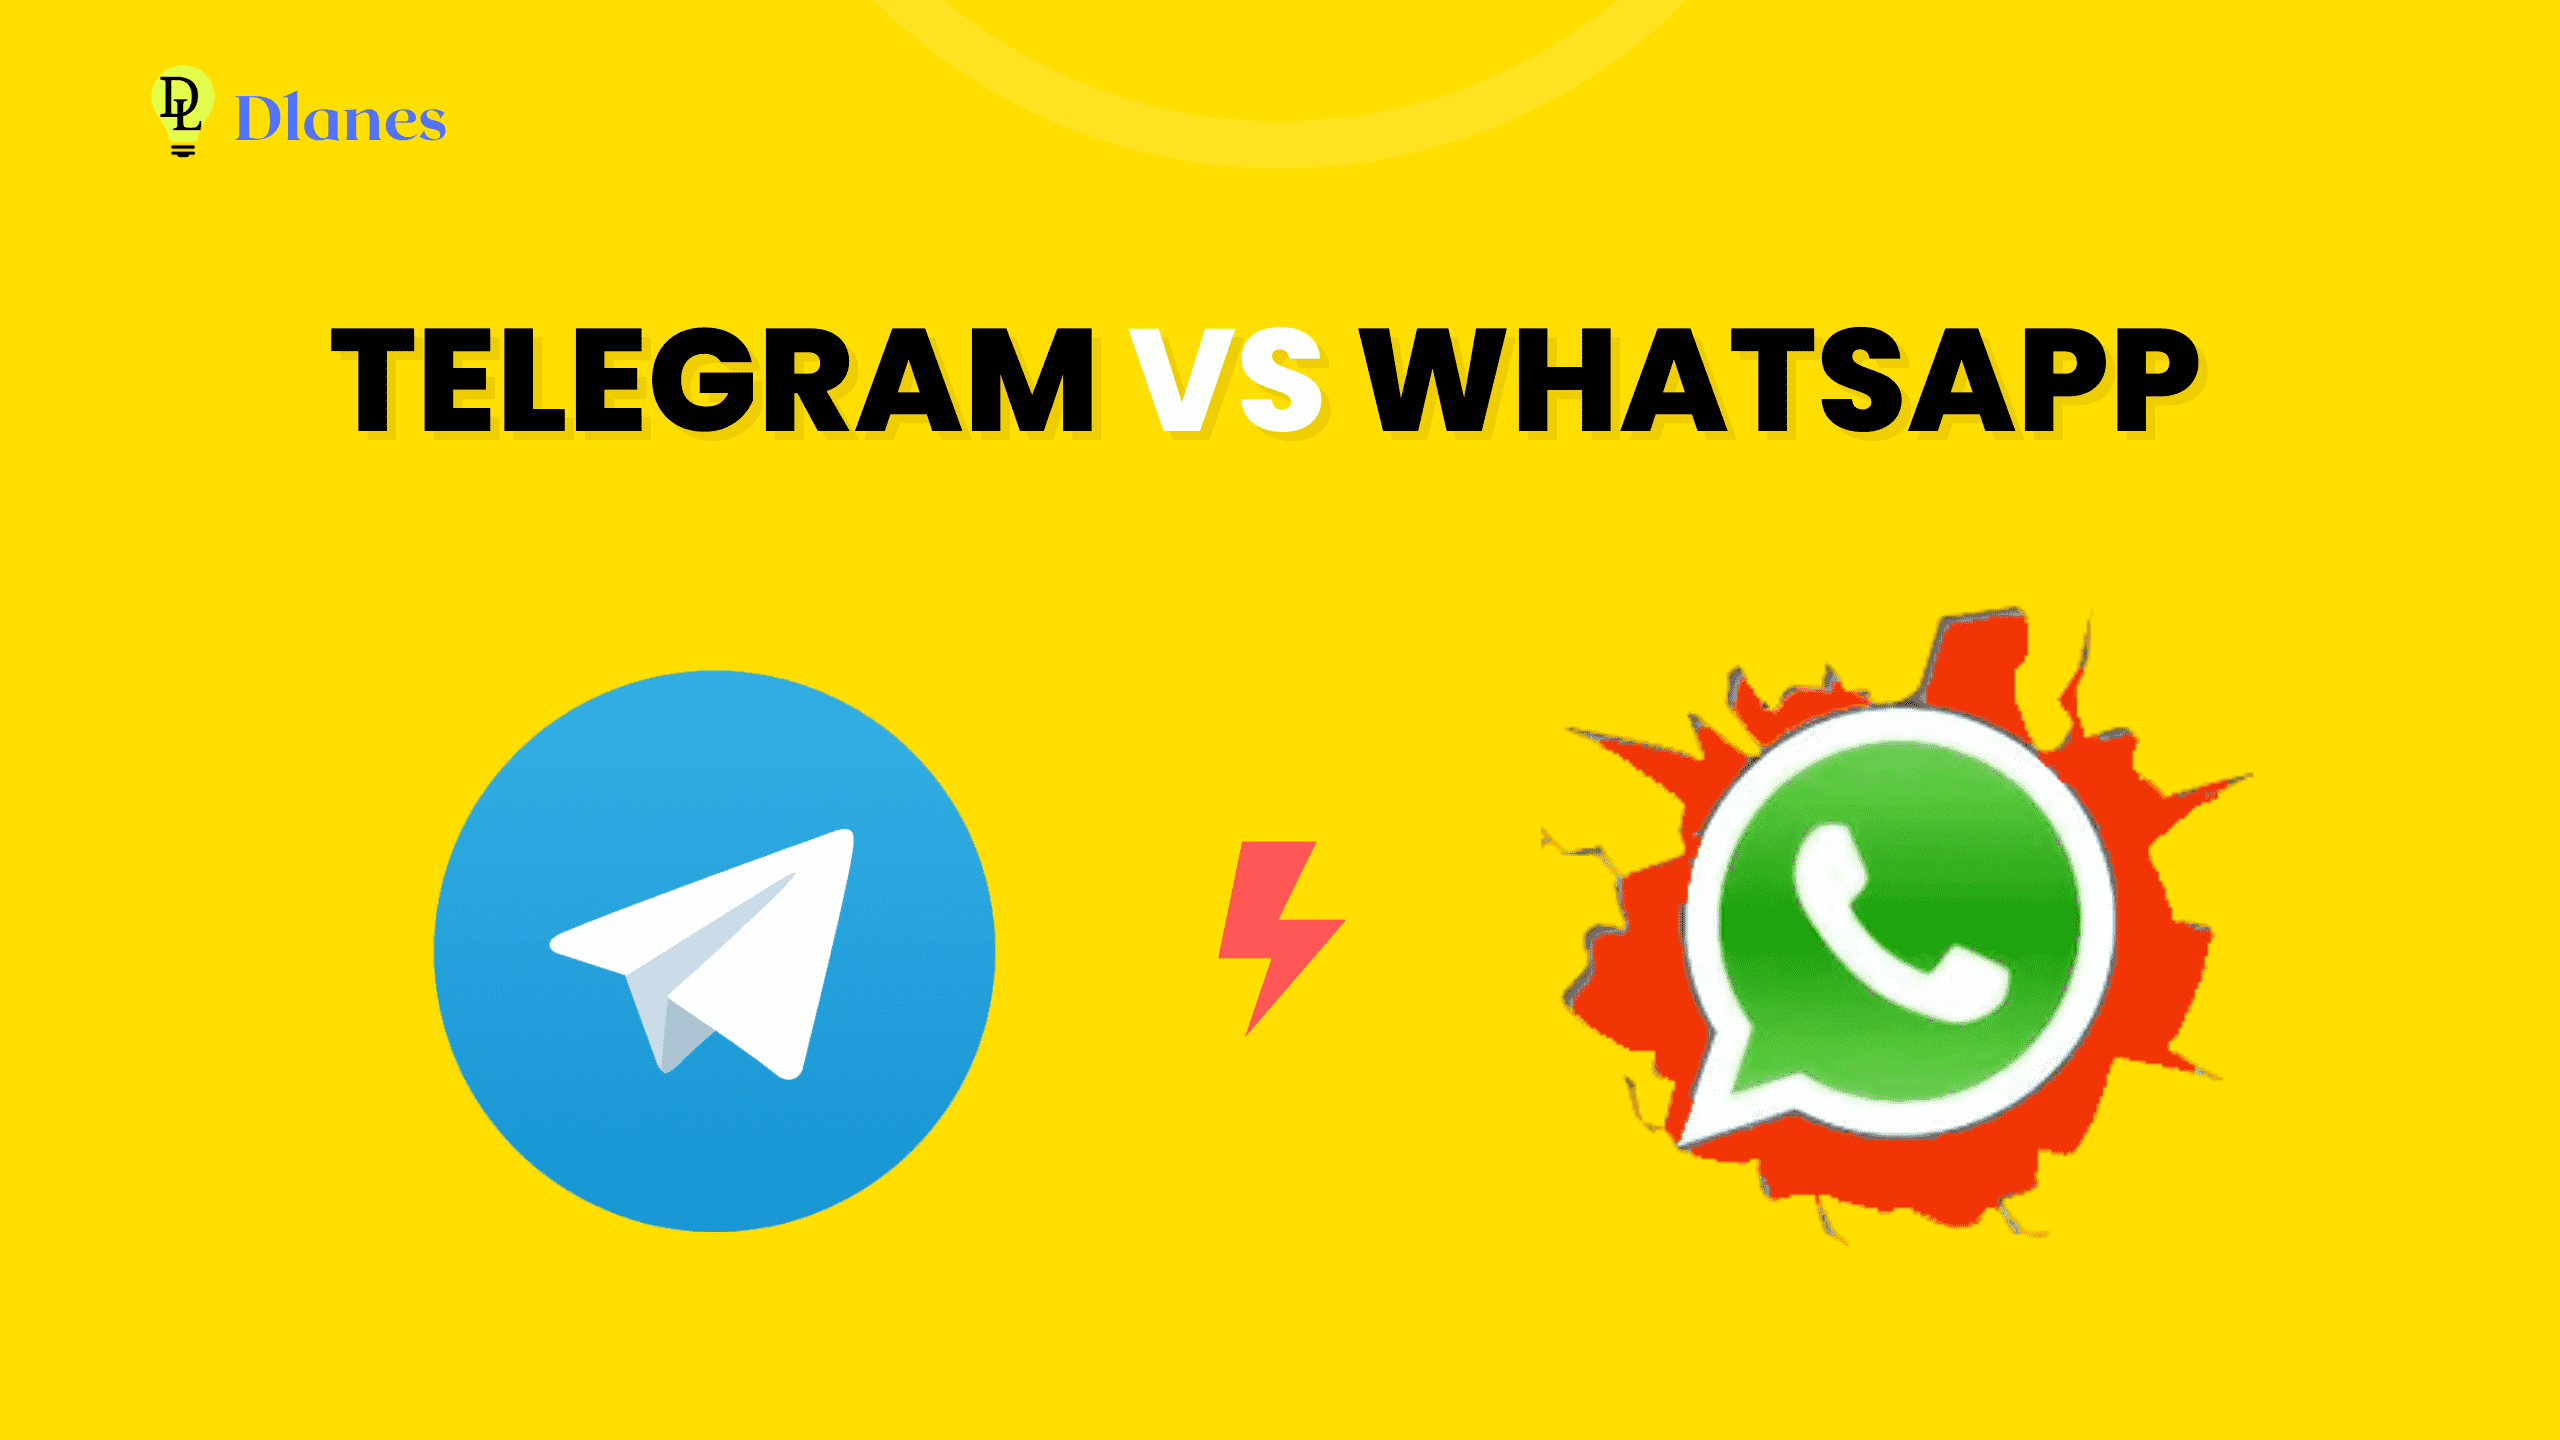 The raise of telegram